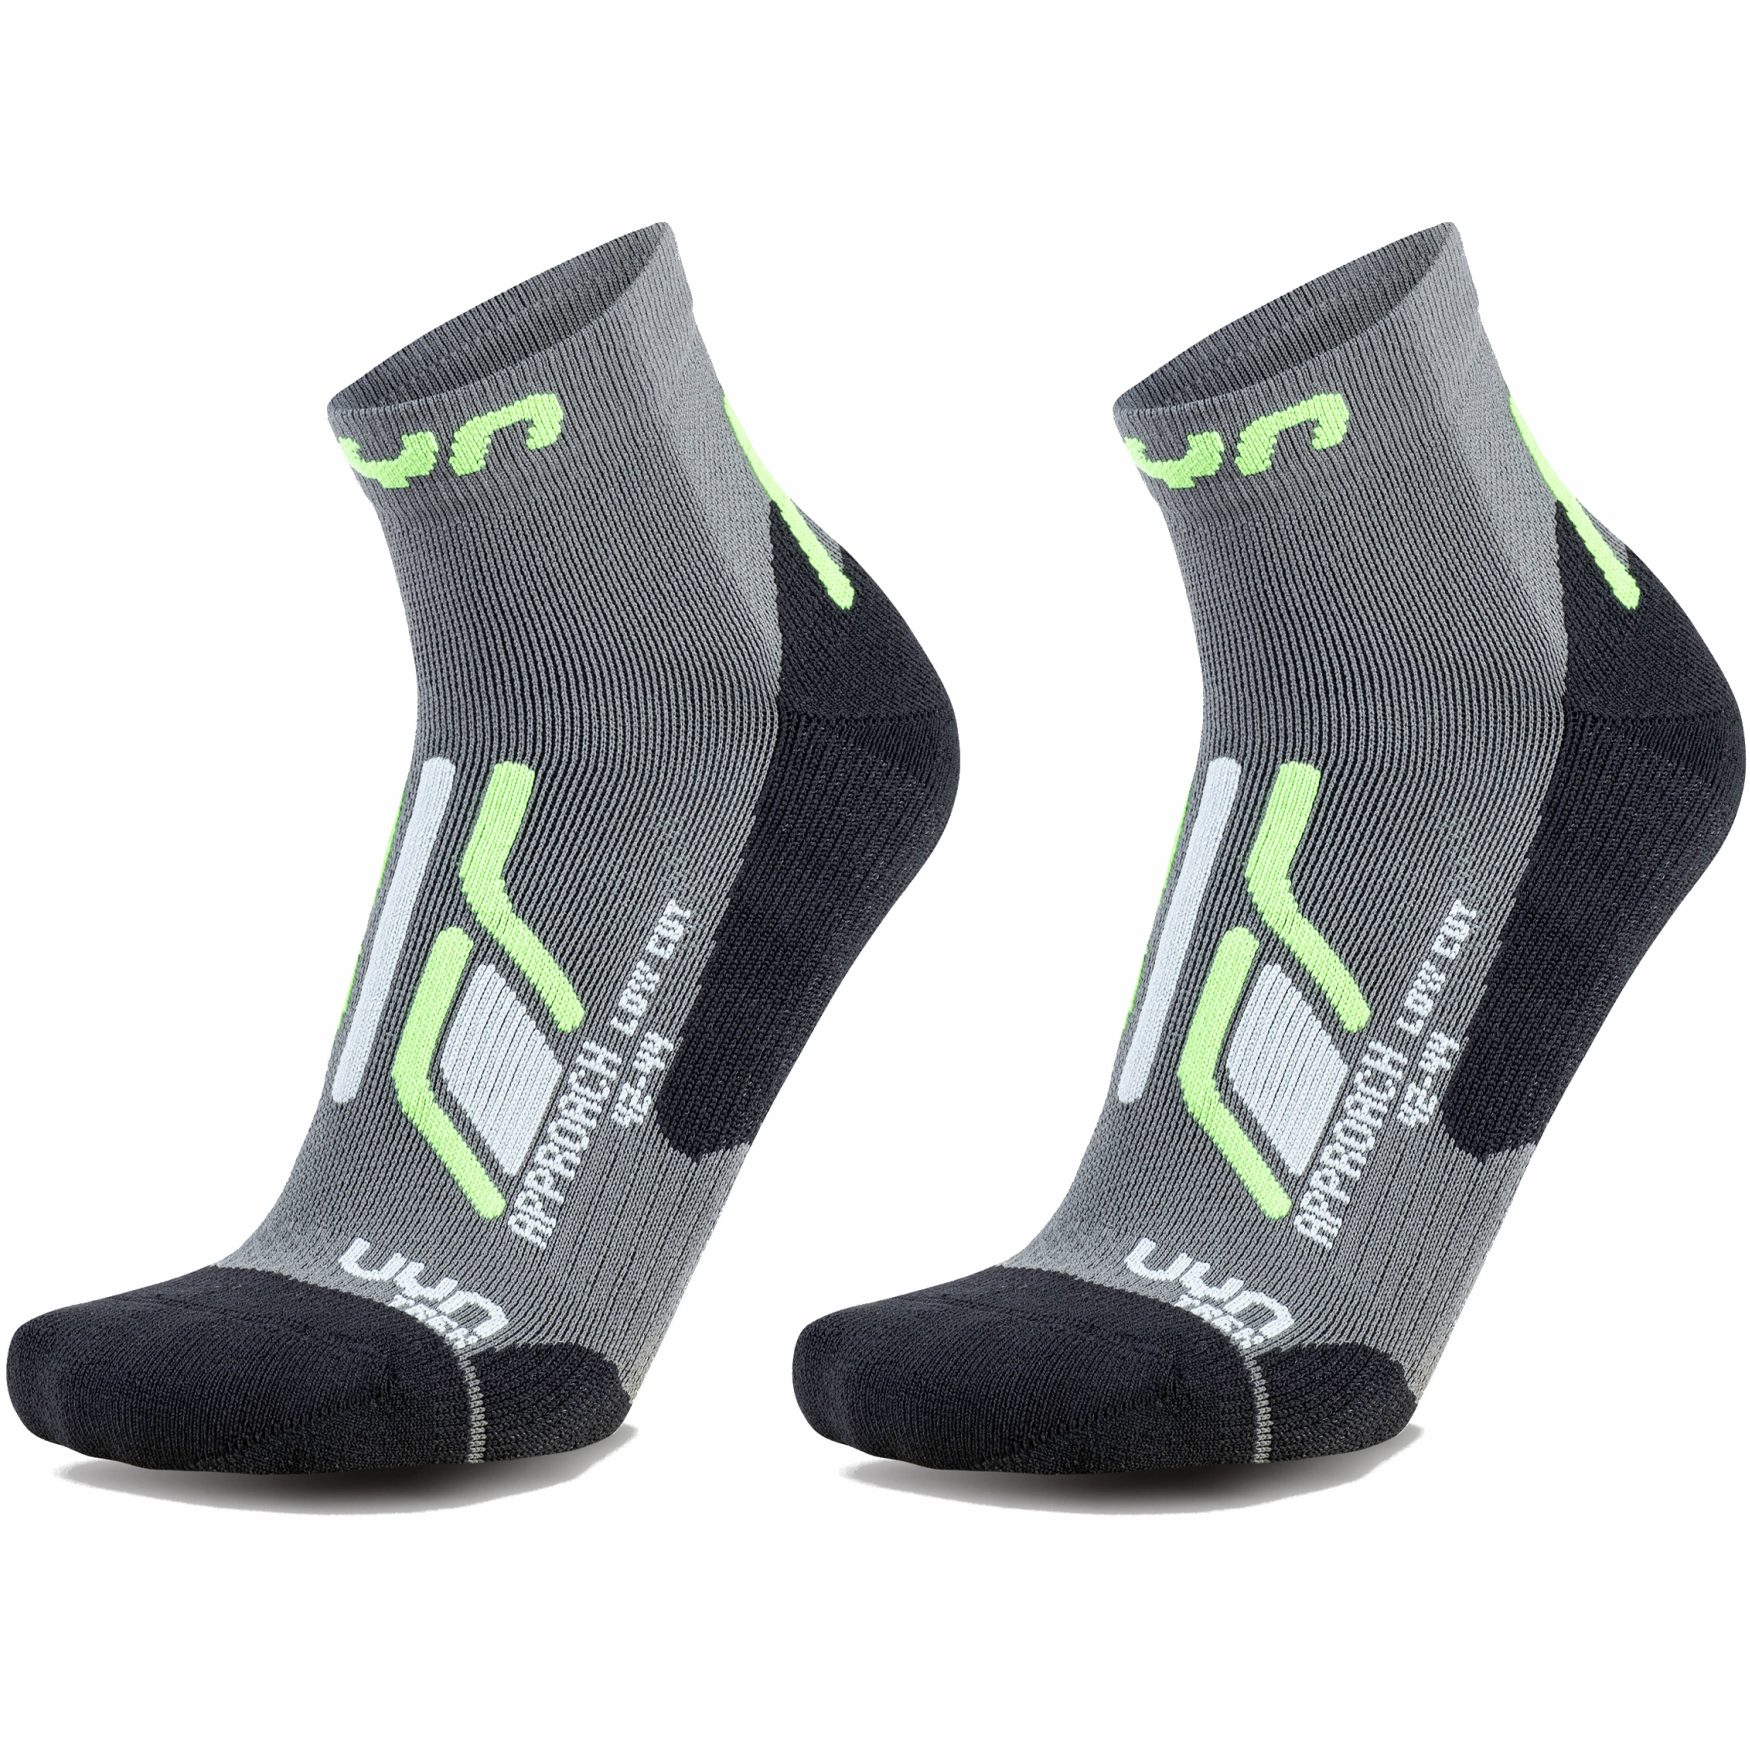 Produktbild von UYN Trekking Approach Low Cut Socken Herren 2 Paar Pack - Grau/Grün